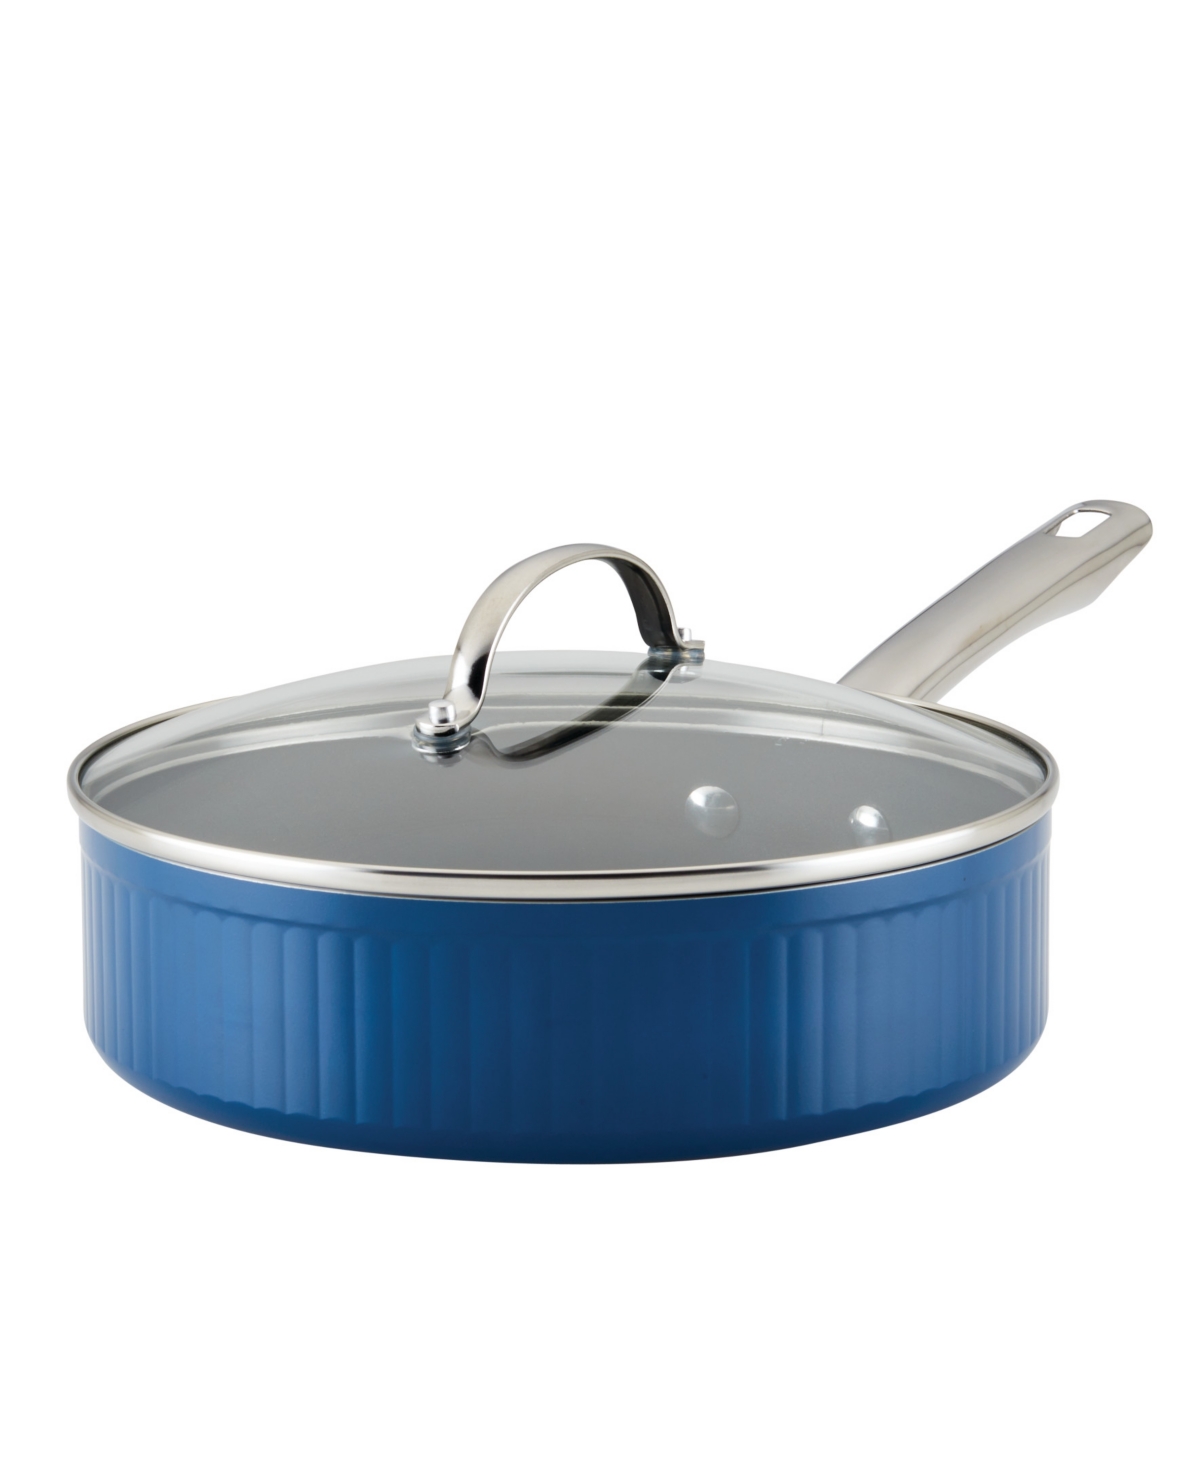 Farberware Style Aluminum Nonstick 3 Quart Cookware Saute Pan With Lid In Blue